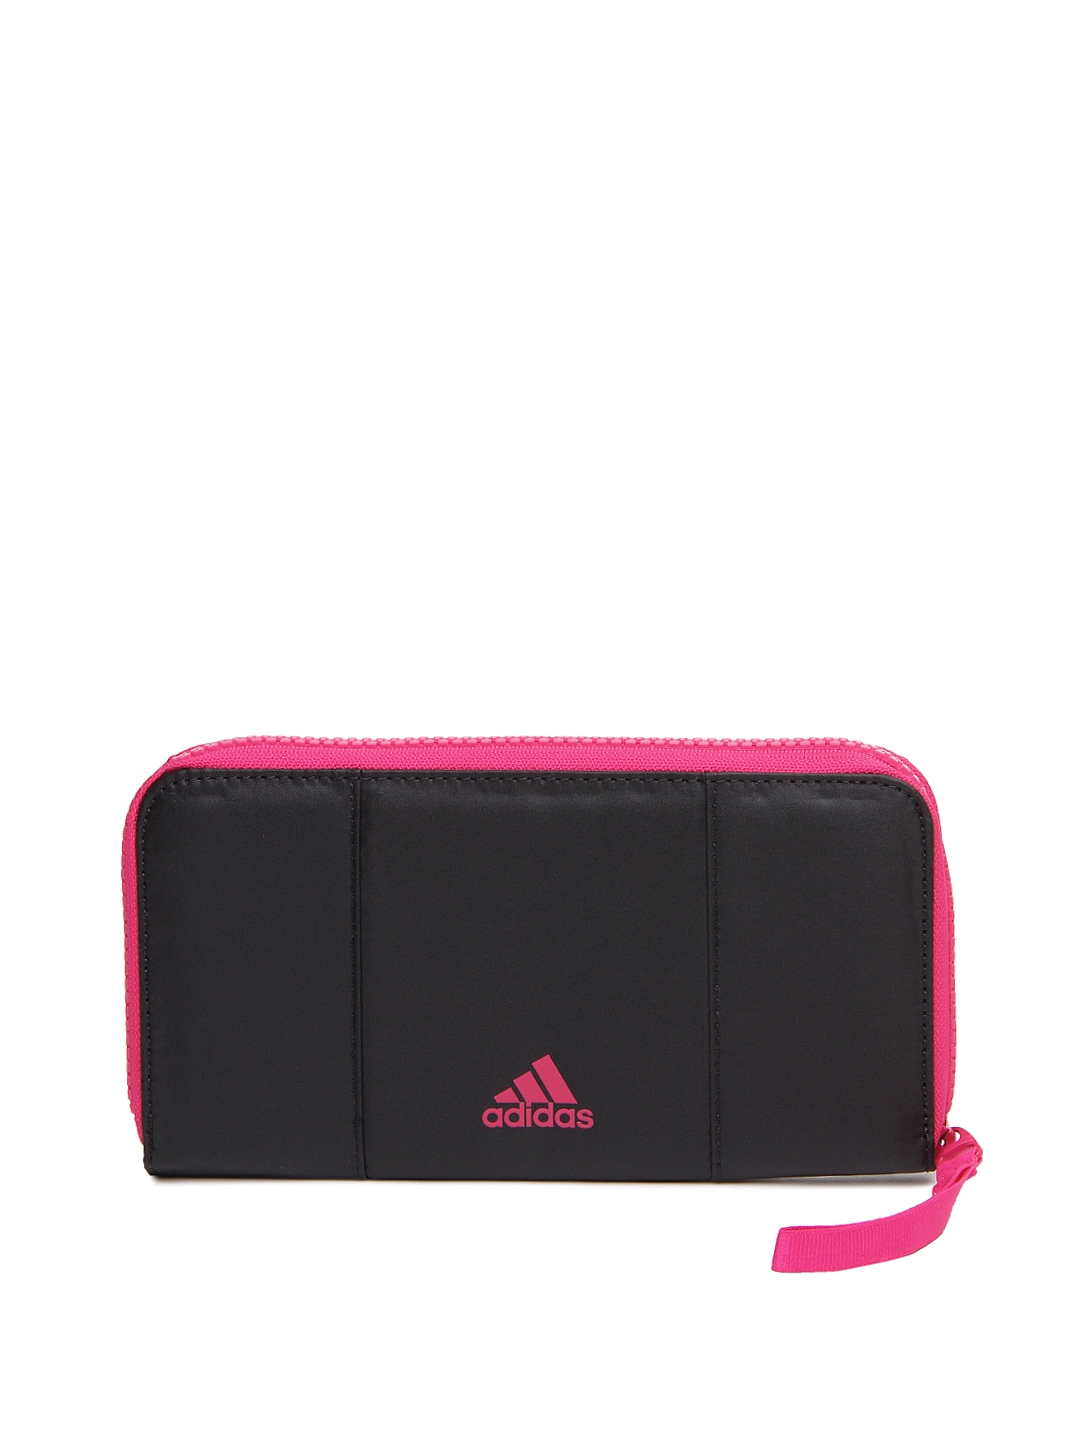 Adidas Originals Wallet In Black Lyst | lupon.gov.ph